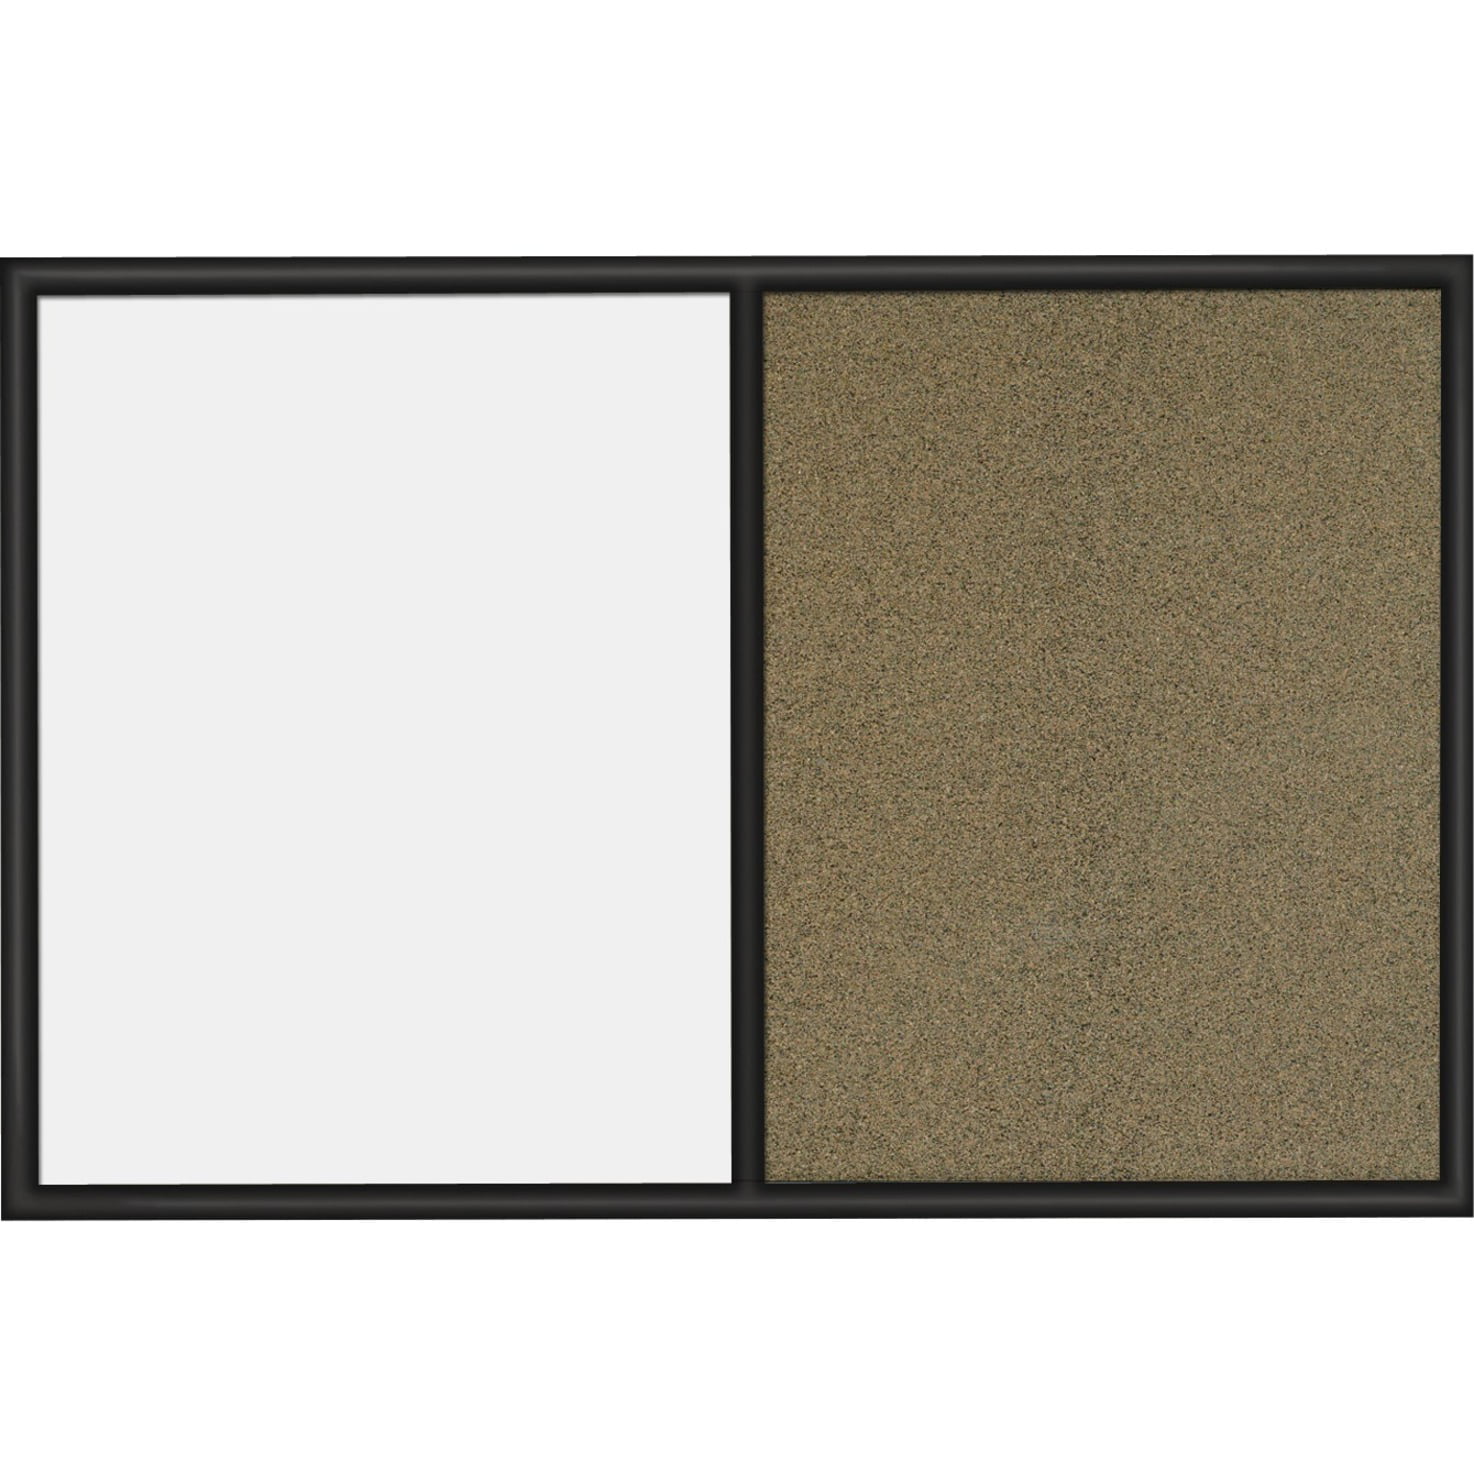 Quartet Whiteboard and Colored Cork Combination Board Black Frame S564 3 x 4 Feet 